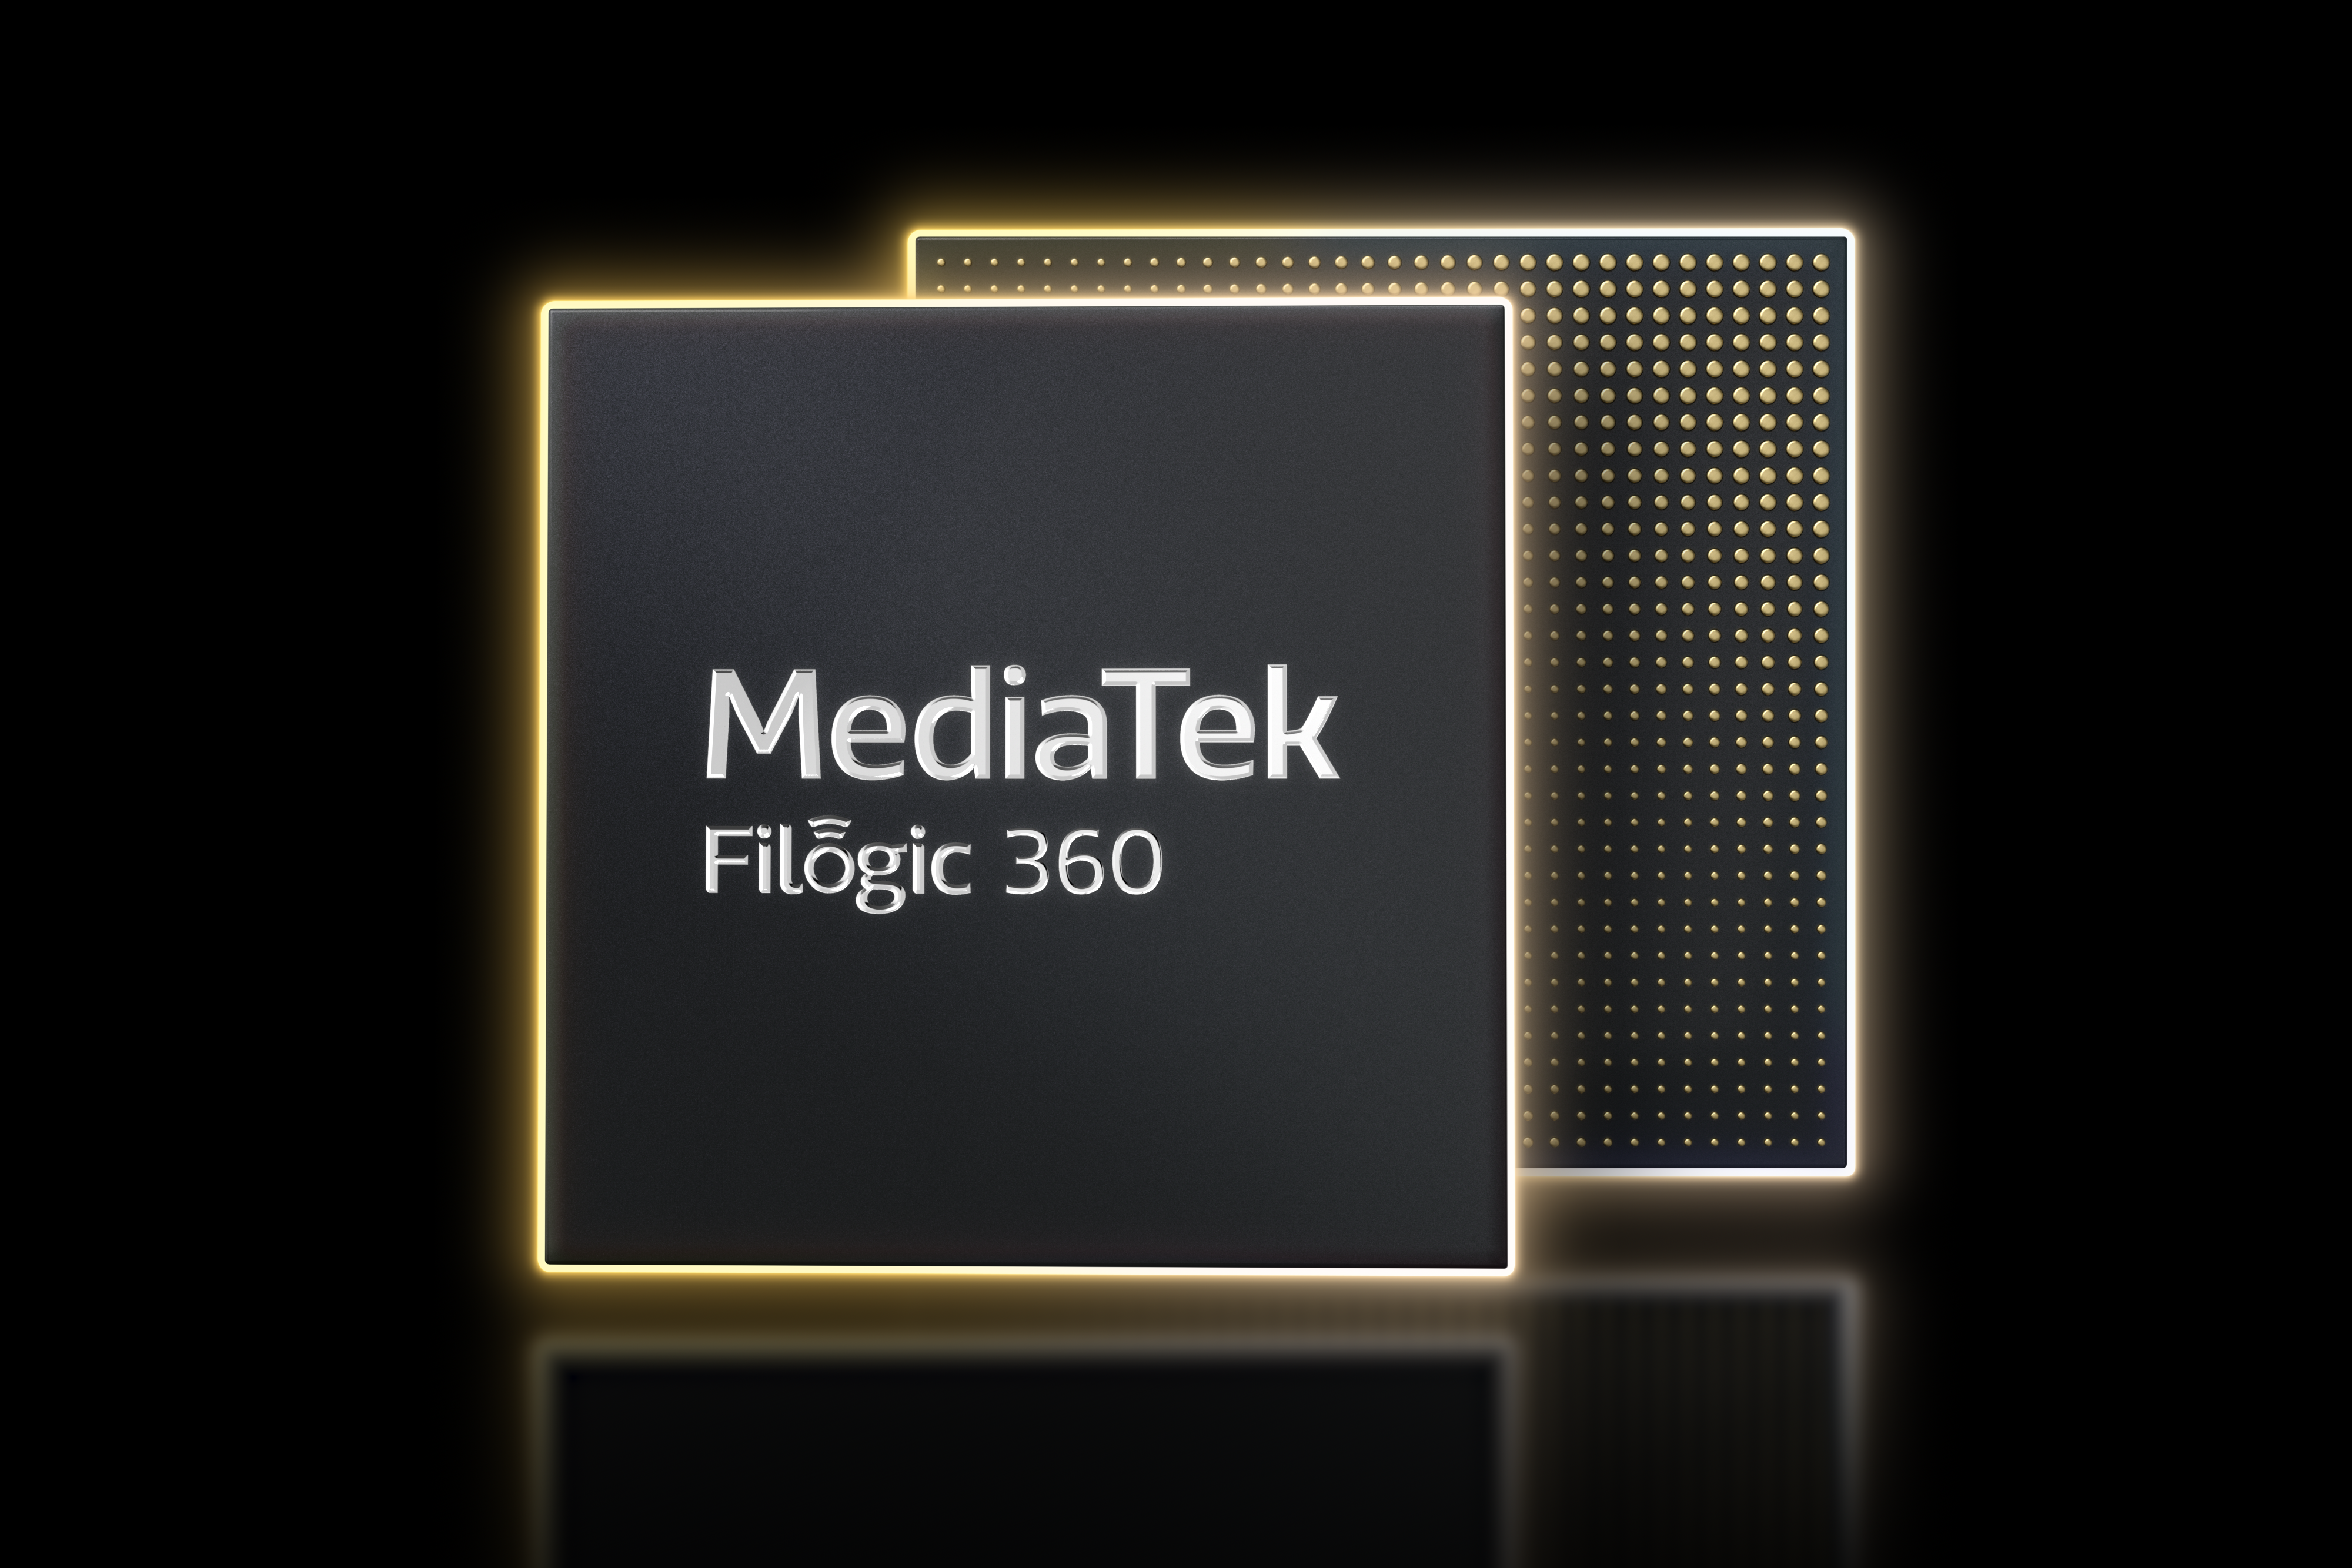 MediaTek Filogic 360 on a black background